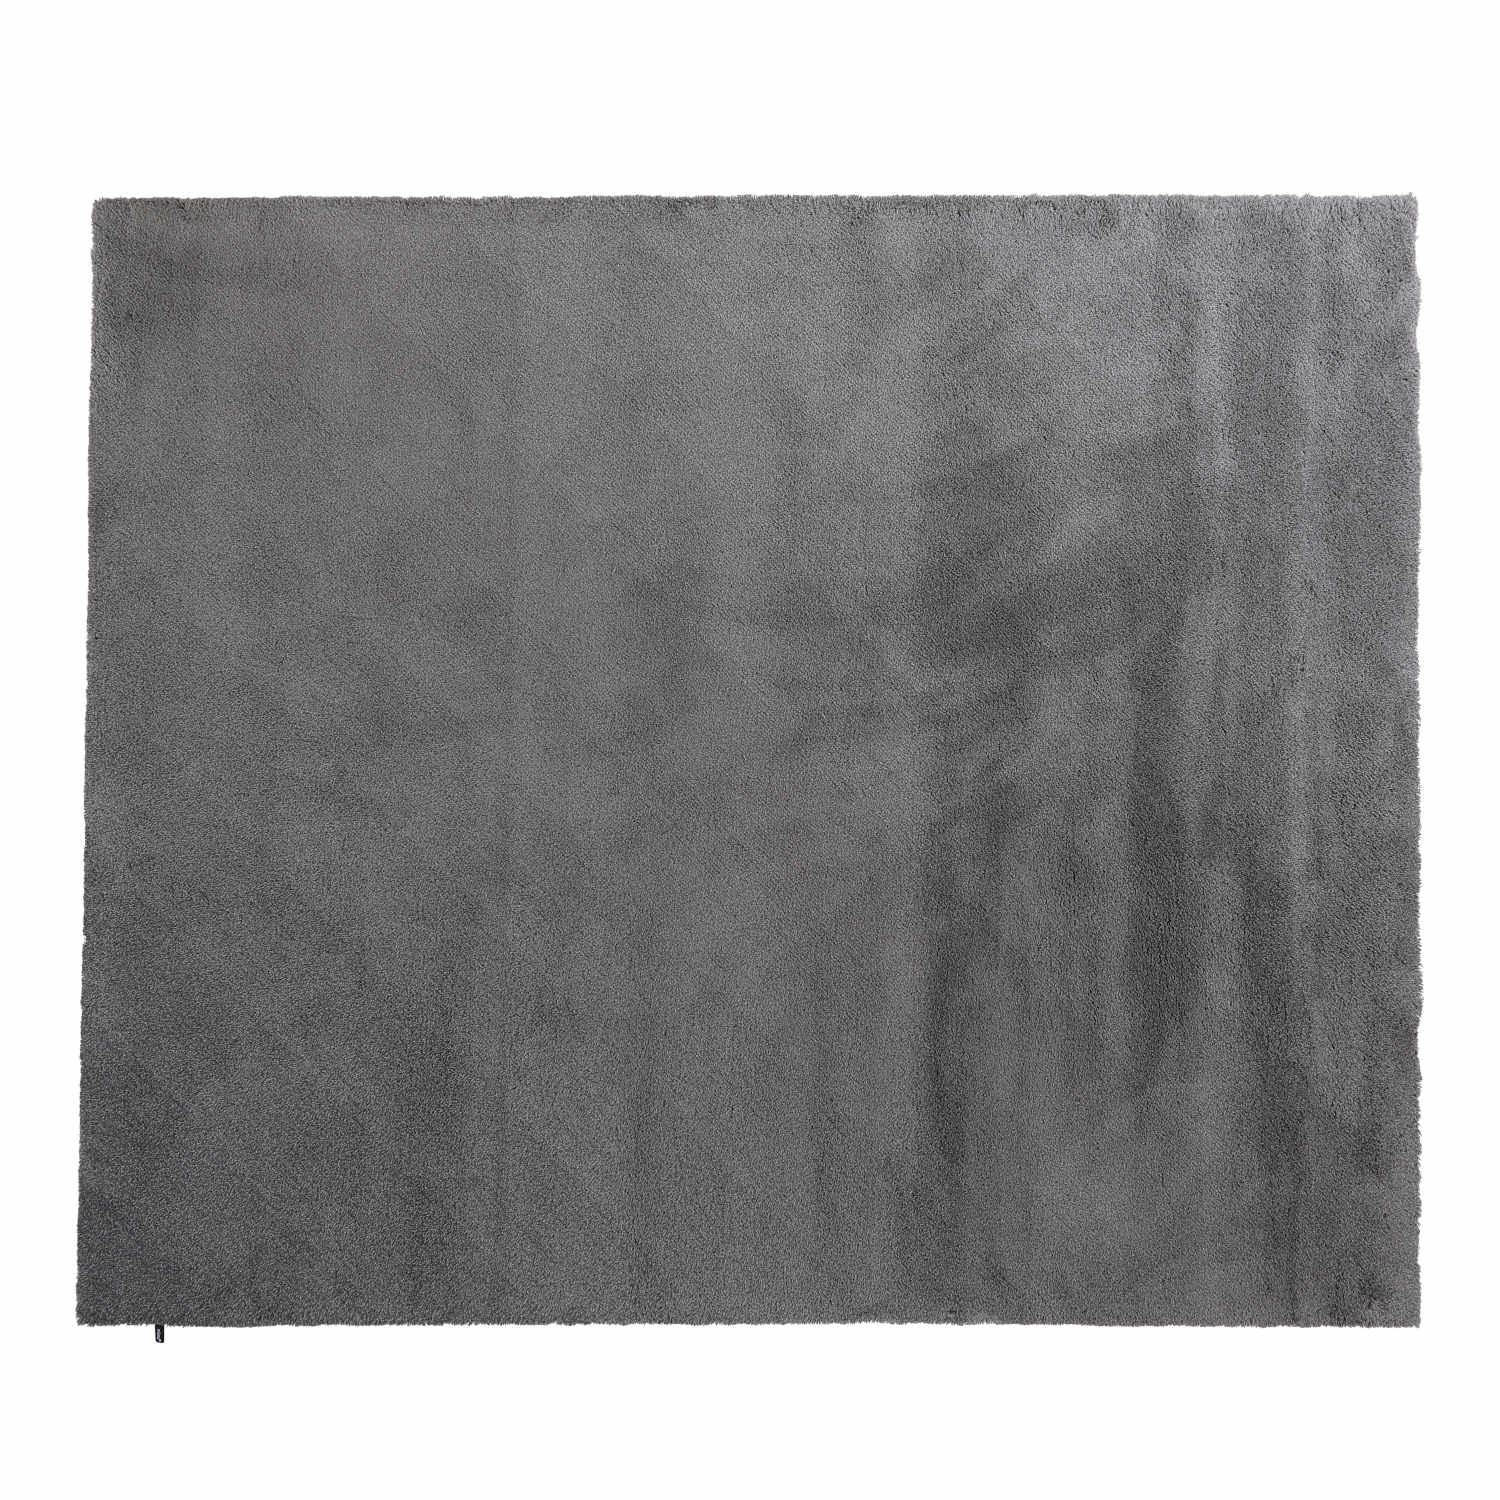 Coality Teppich, Grösse 300 x 400 cm, Farbe taupe von miinu